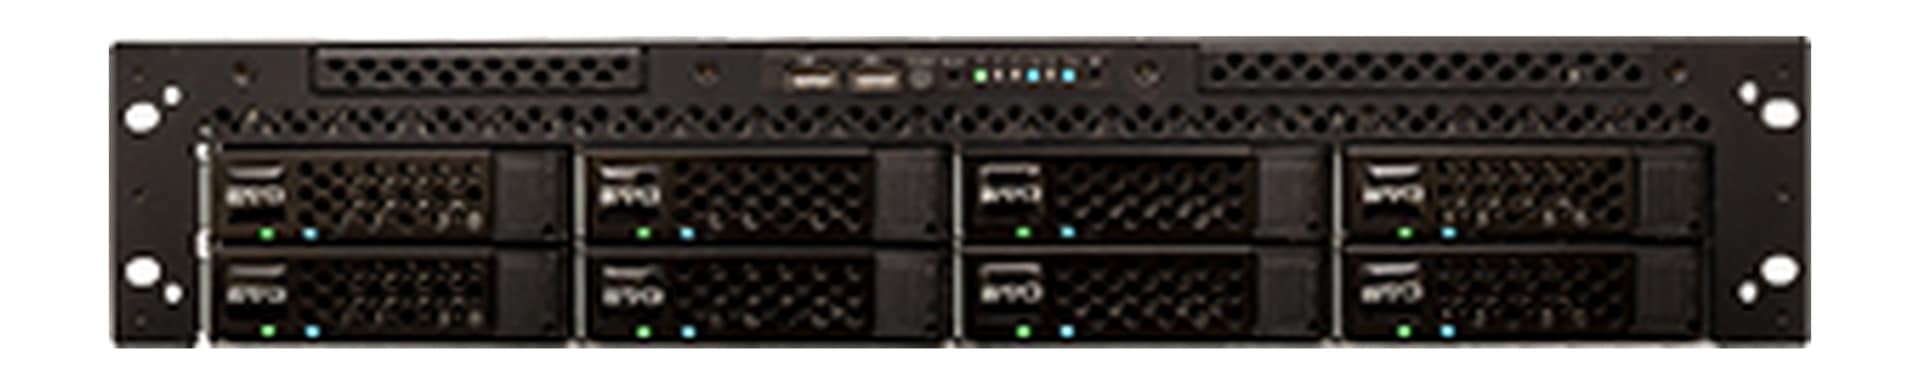 SNS EVO 2U 8 Bay Shared Storage Server with 64TB Raw Capacity Hard Drive